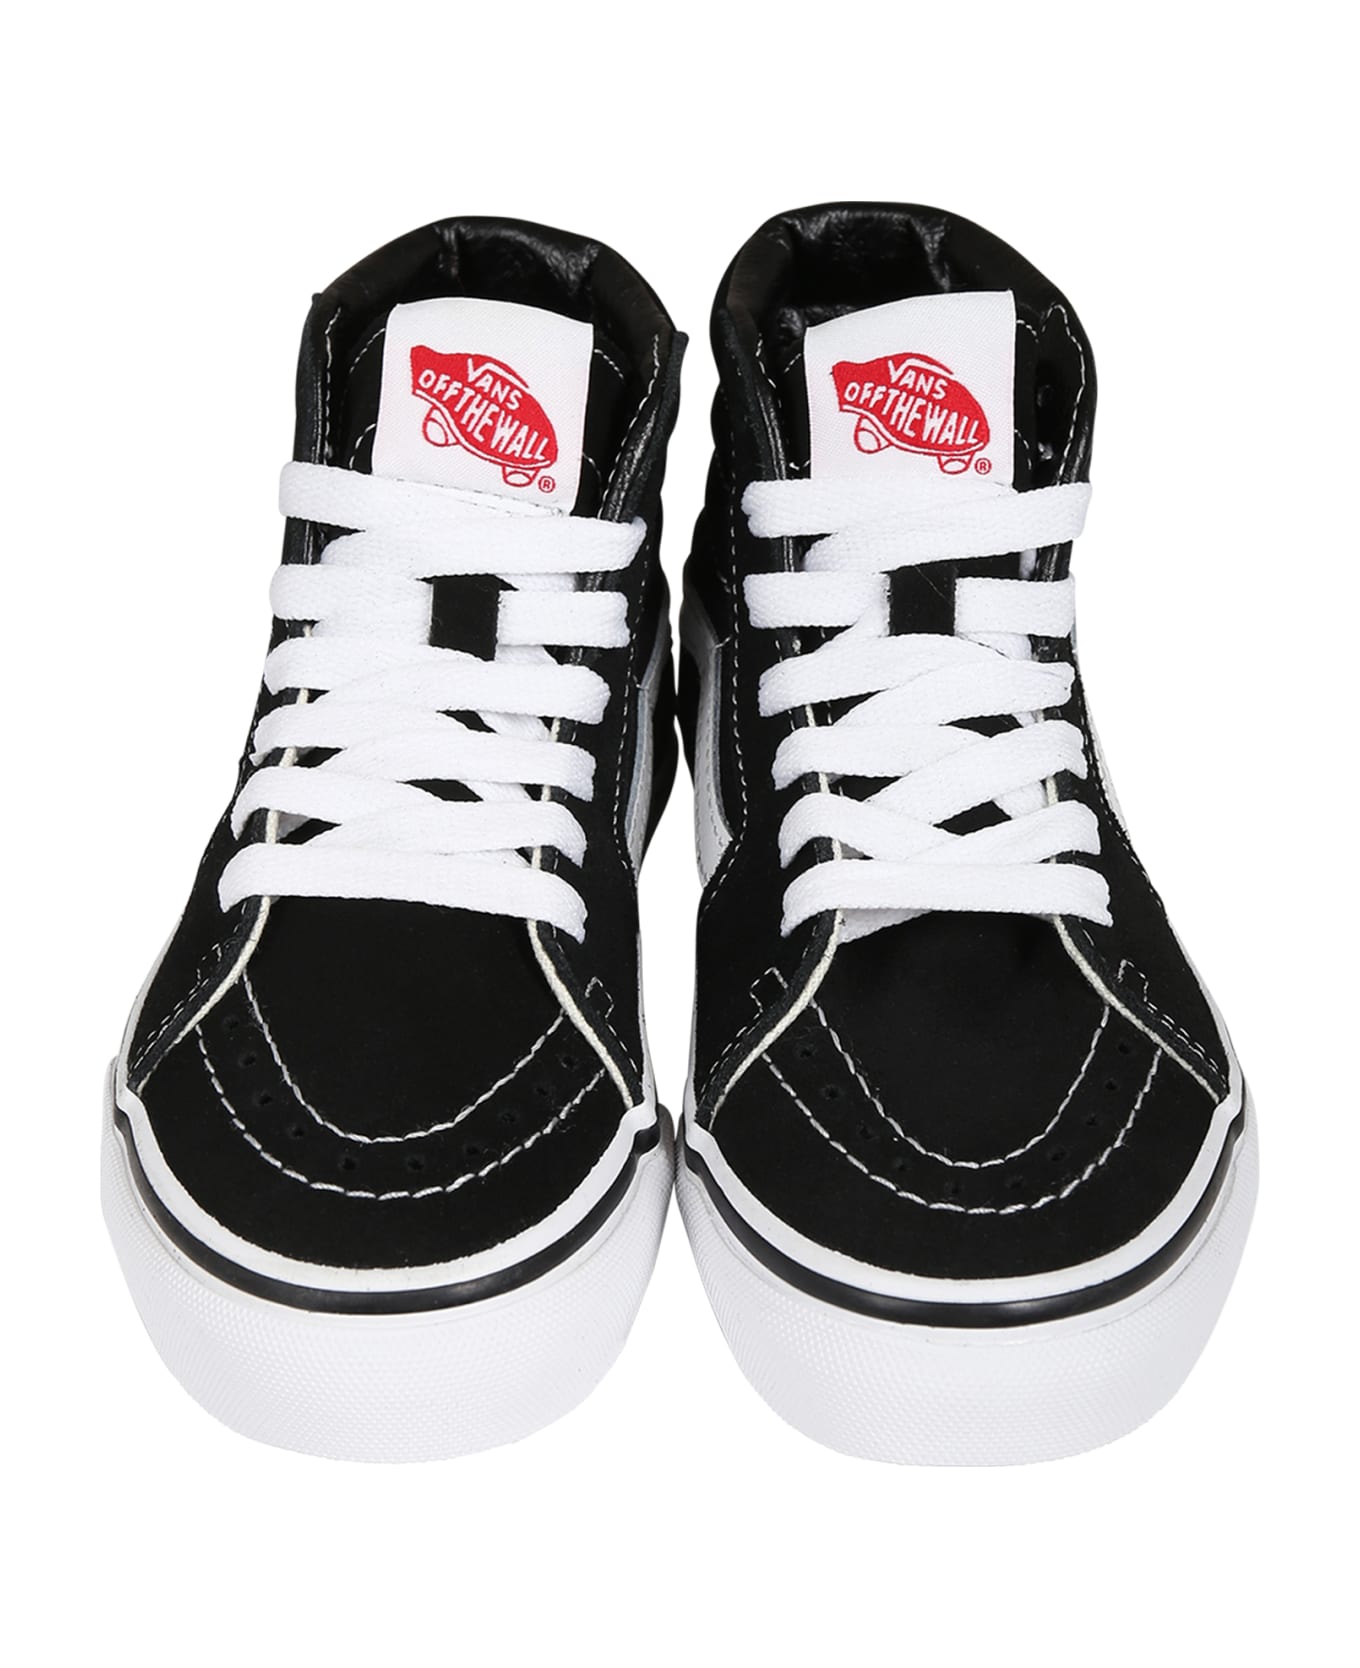 Vans Black Sk8-hi Sneakers For Kids - Black シューズ